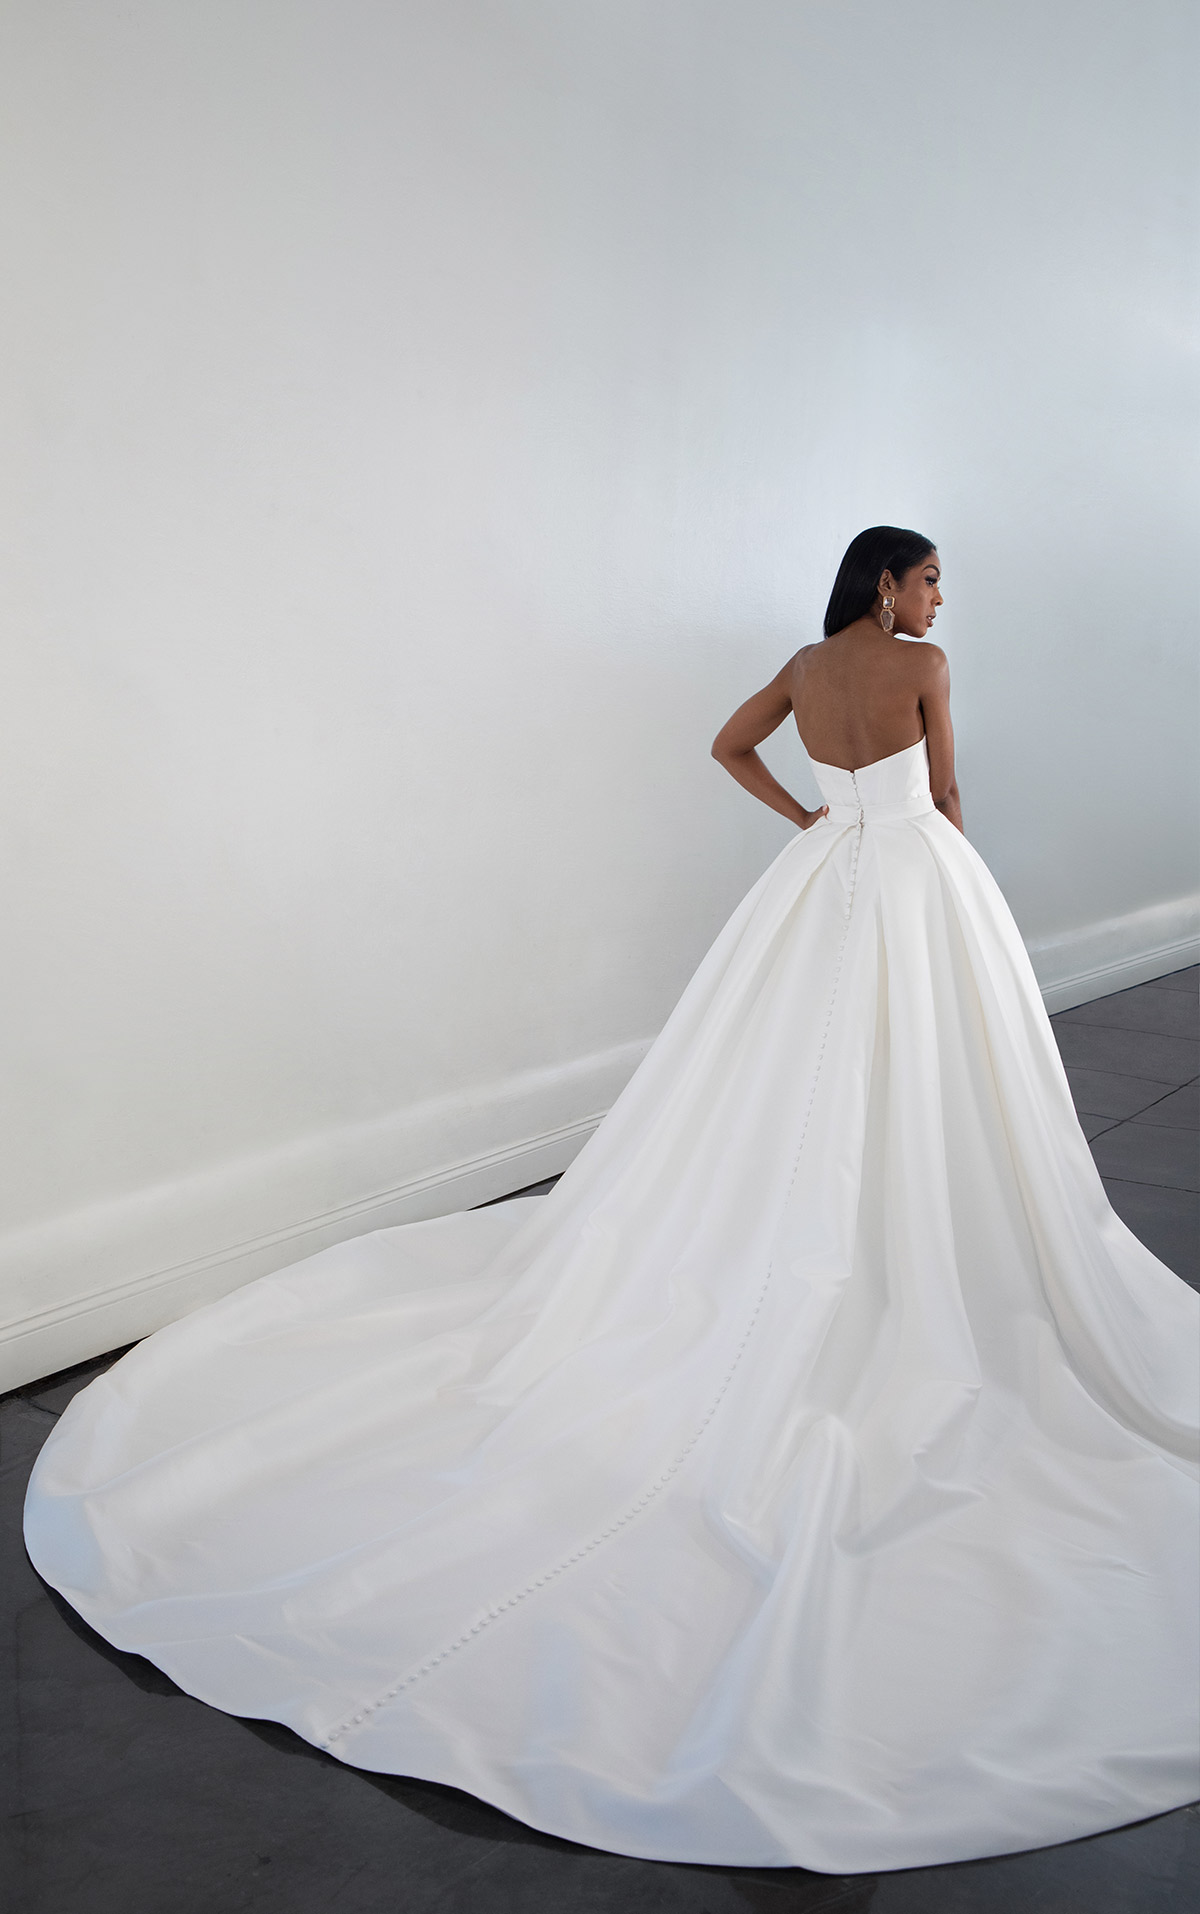 Martina Liana Wedding Dresses in the US & Canada